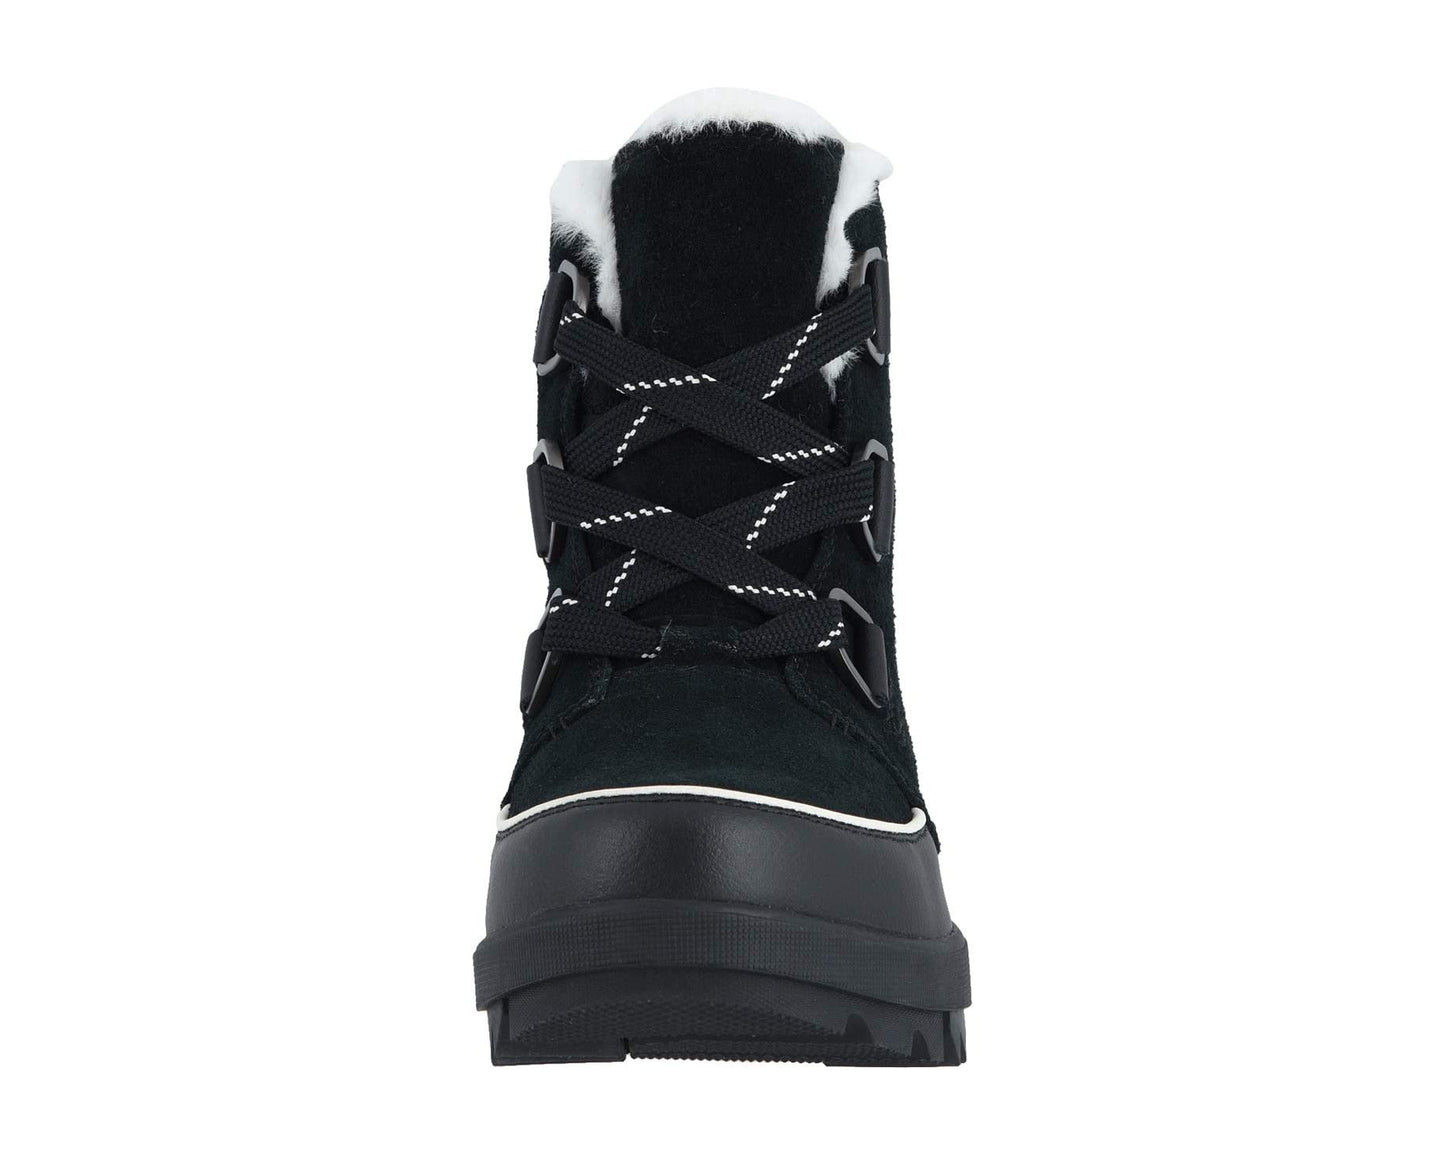 Sorel Tivoli IV Women's Size 8 Faux Fur Collar Waterproof Winter Boot, Black